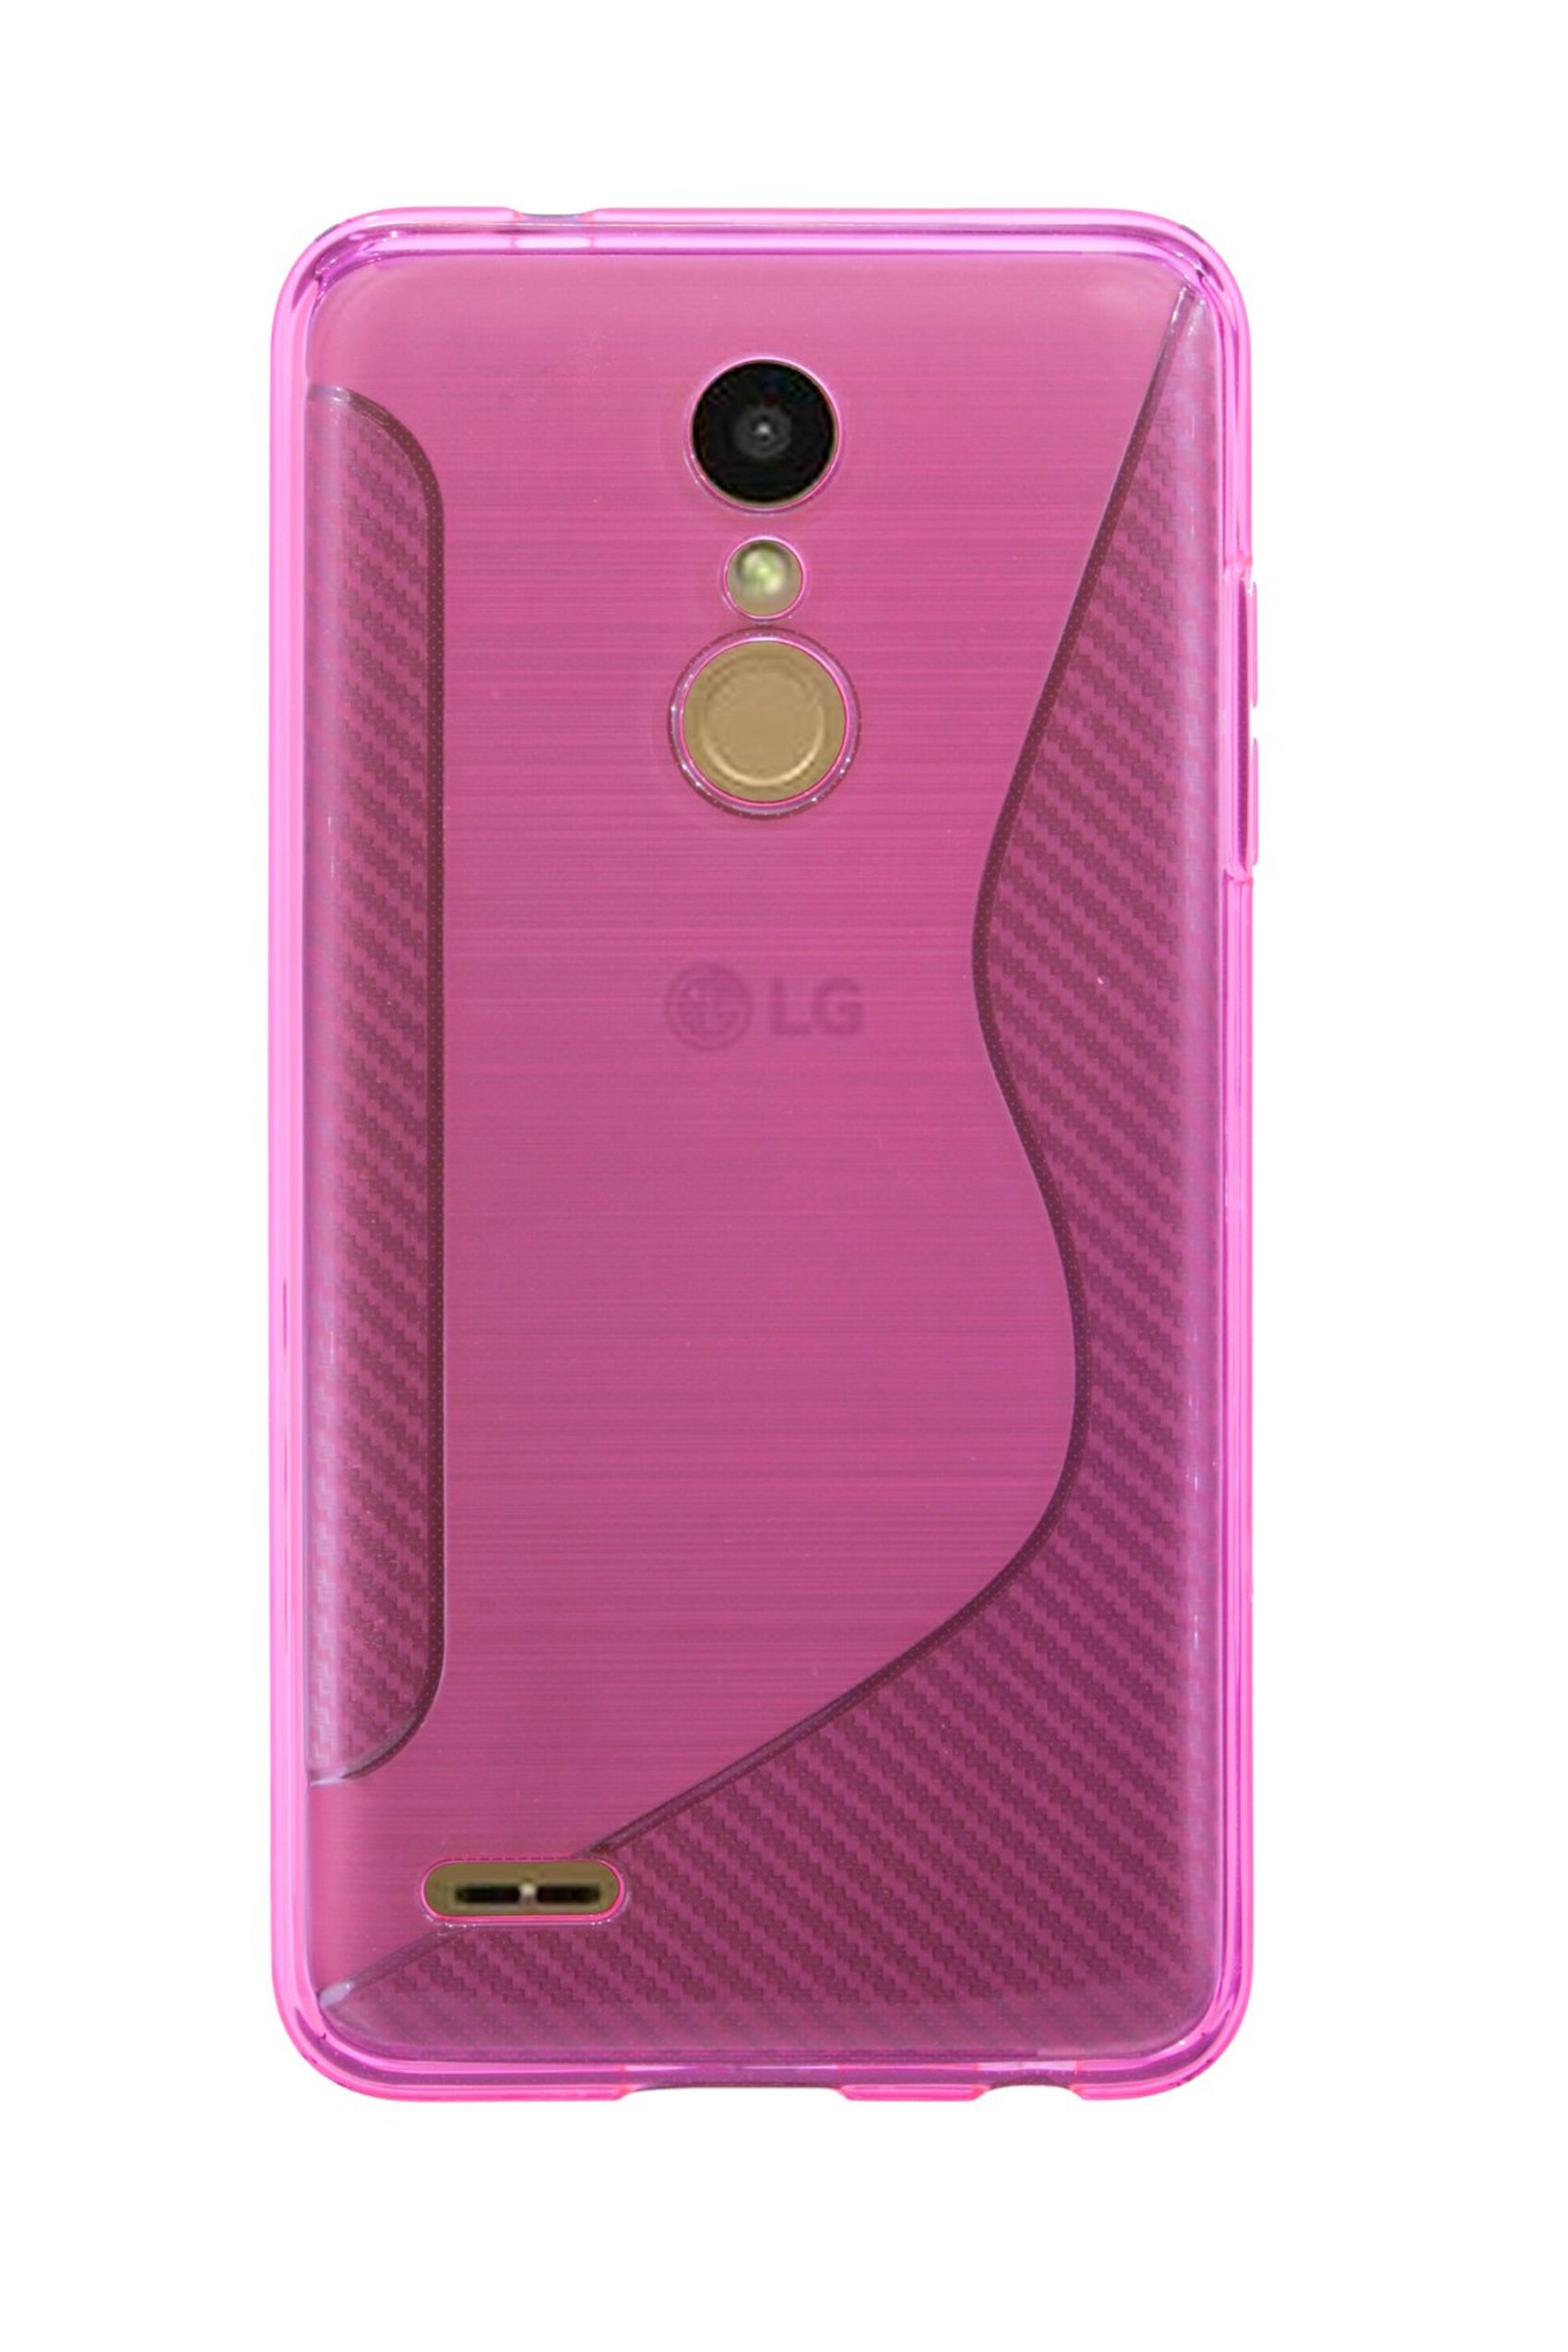 COFI LG LG, Hülle Cover Zubehör Silikon Bumper in Silikonschale K9, Bumper, K9//S-Line TPU Pink, Rosa SchutzHülle Case